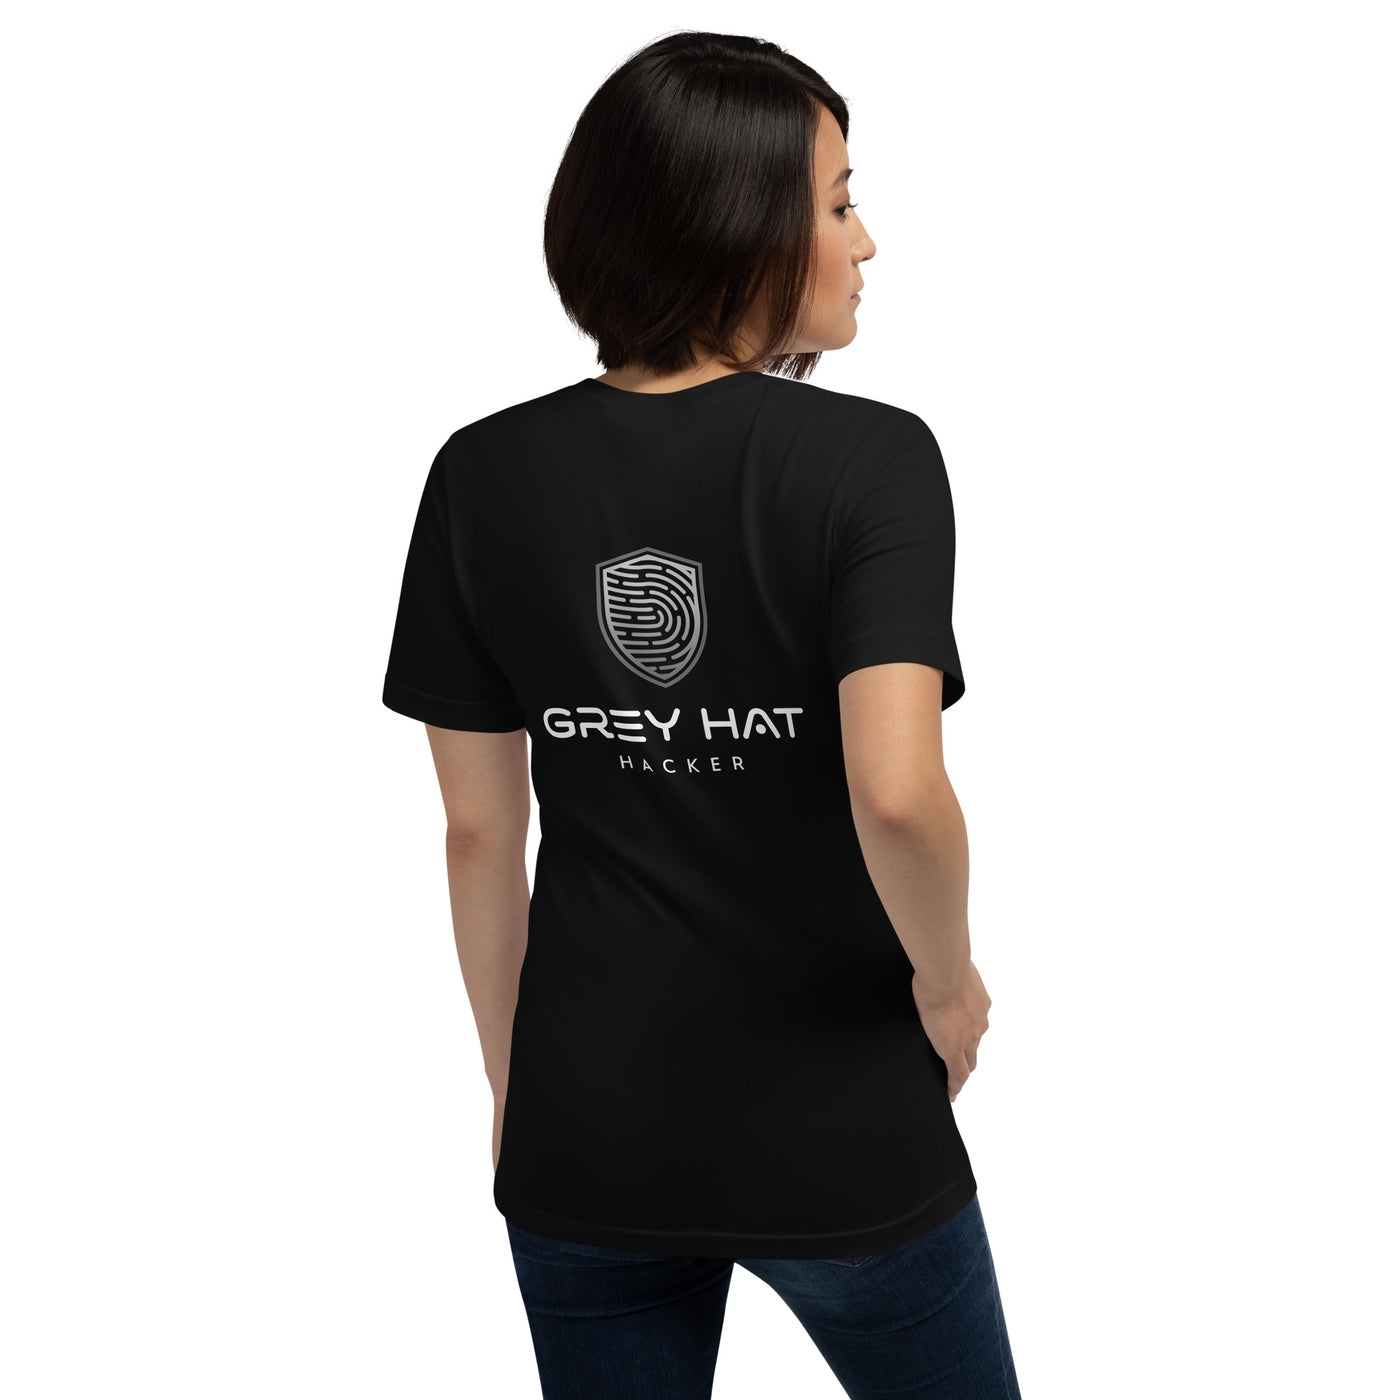 Grey Hat Hacker V5 - Unisex t-shirt ( Back Print )